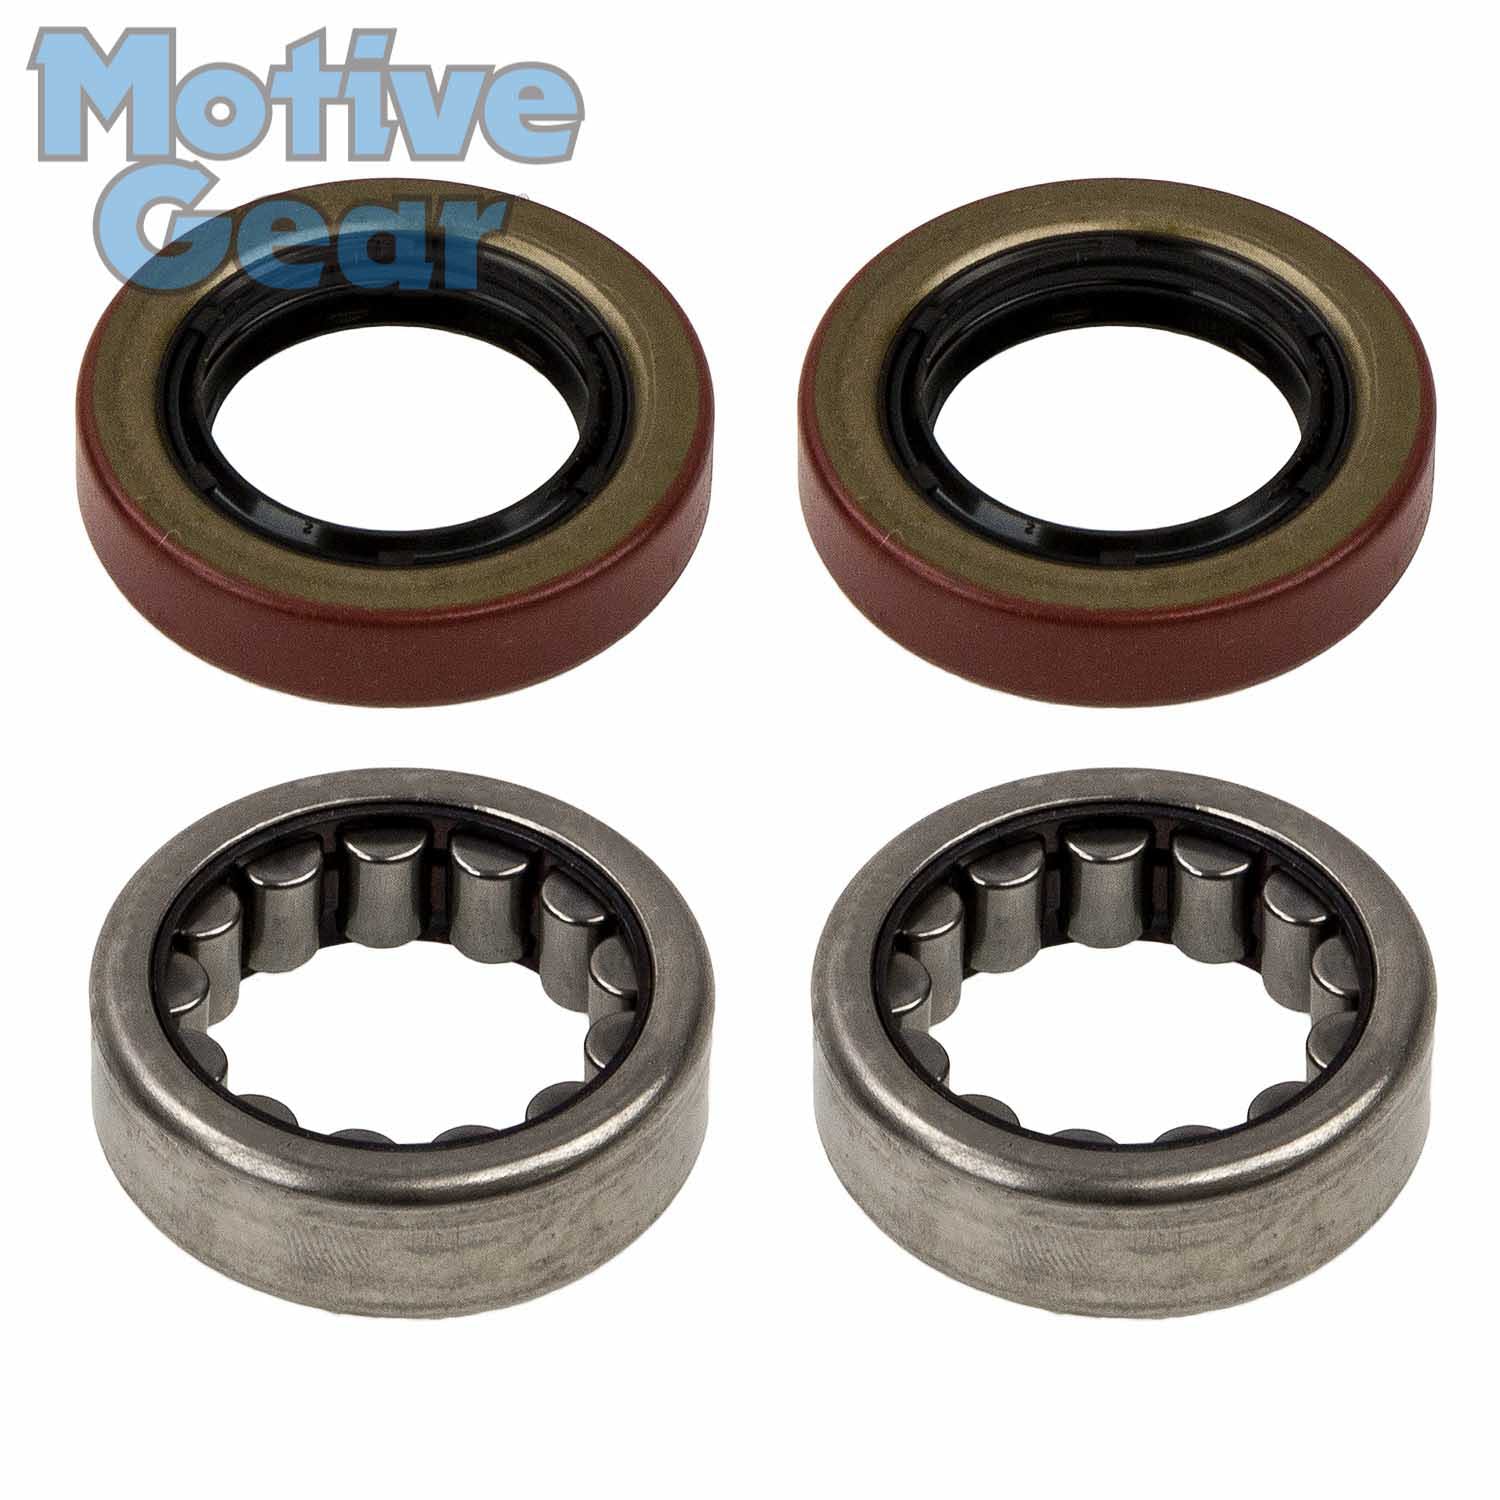 Motive Gear KIT 5707 Axle Bearing and Seal Kit